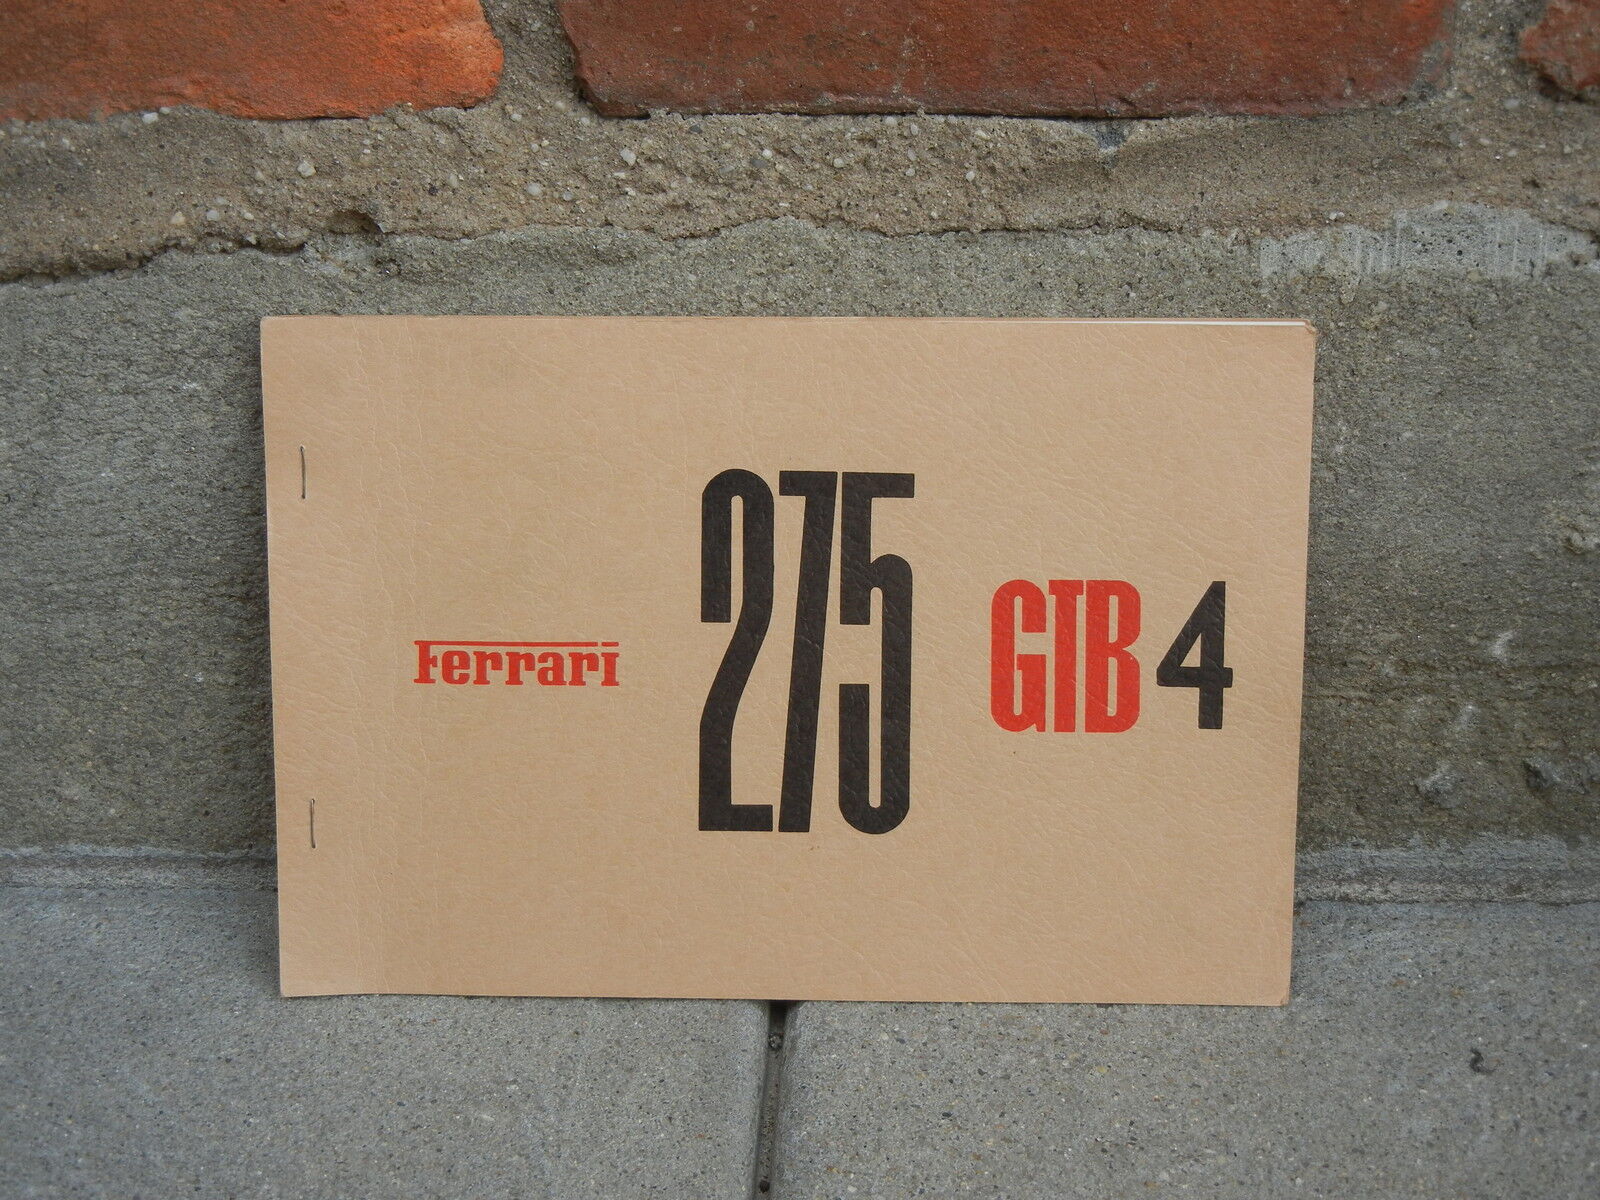 FERRARI 275 GTB4  SPARE PARTS BOOK MANUAL IN EXCEPTIONAL CONDITION OVERALL.